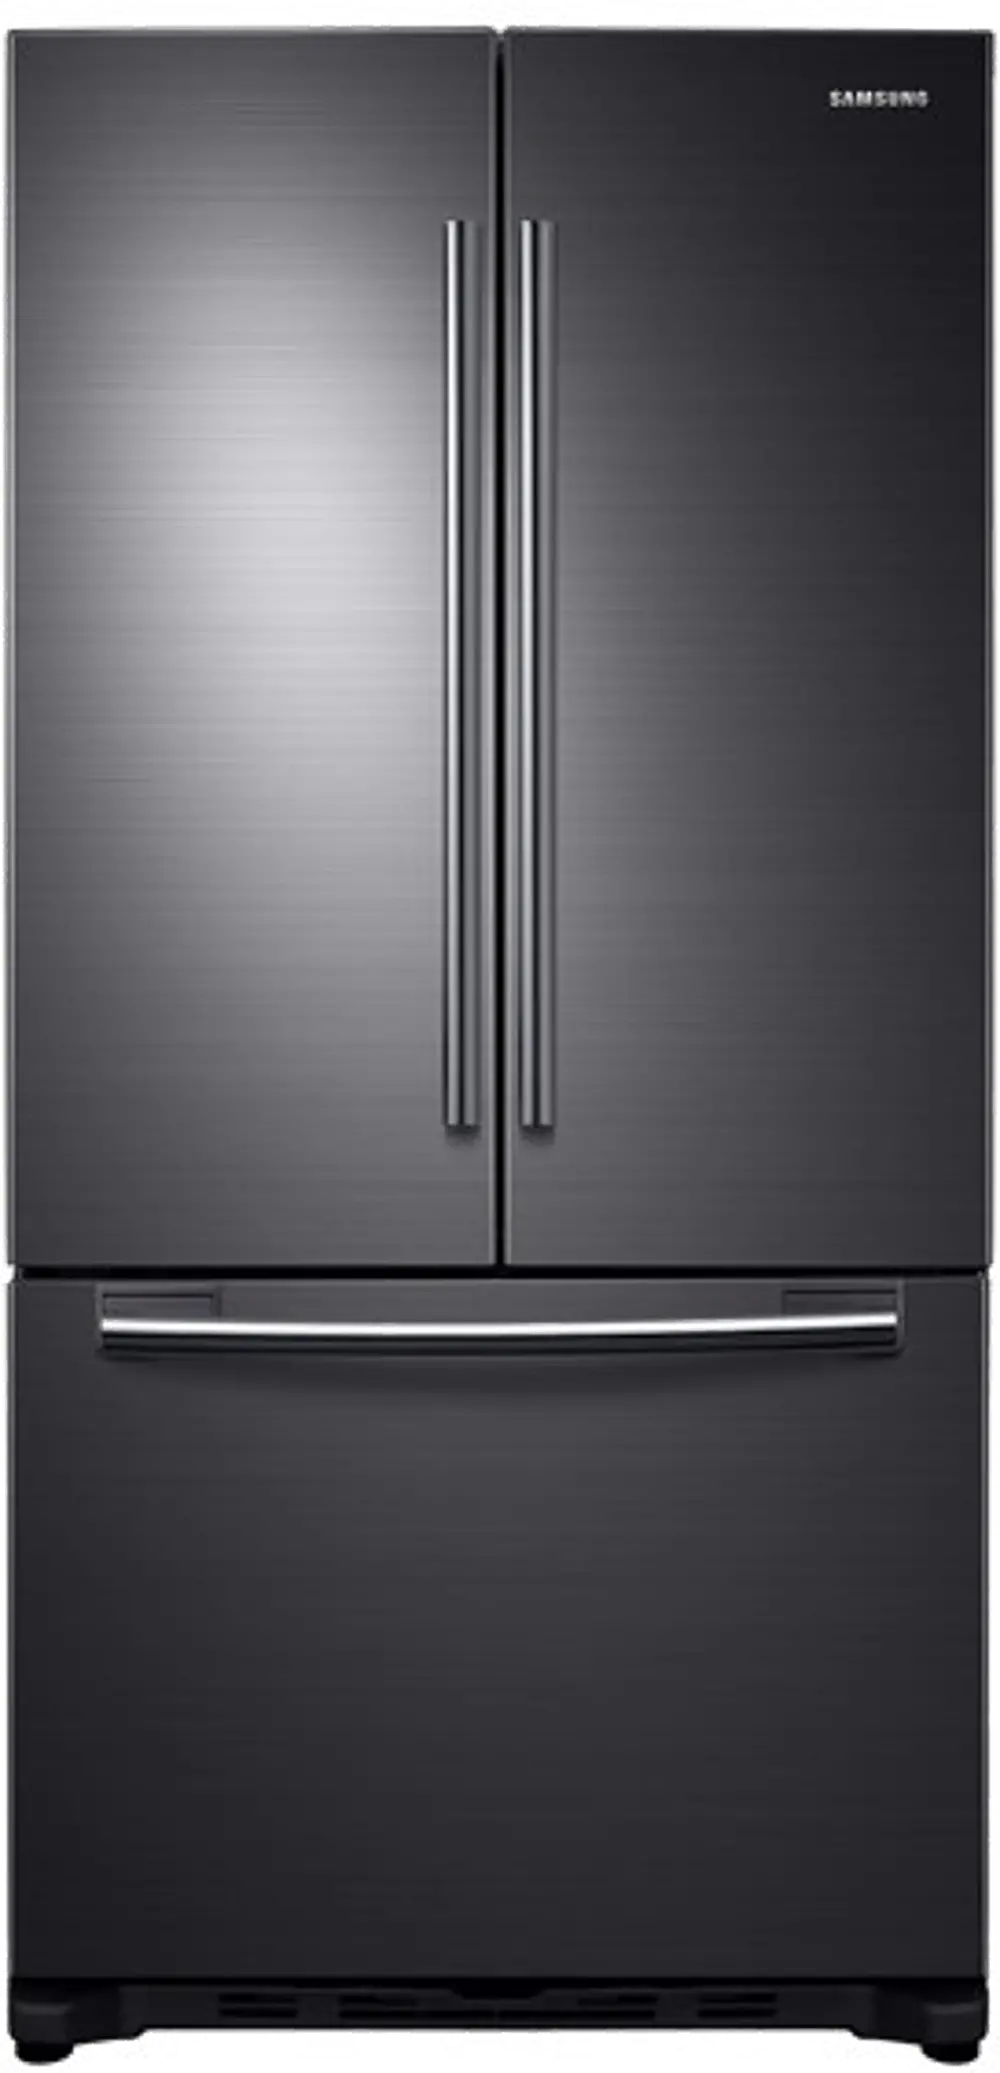 RF18HFENBSG Samsung Counter Depth French Door Refrigerator - 17.5 cu. ft., 33 Inch Black Stainless Steel-1